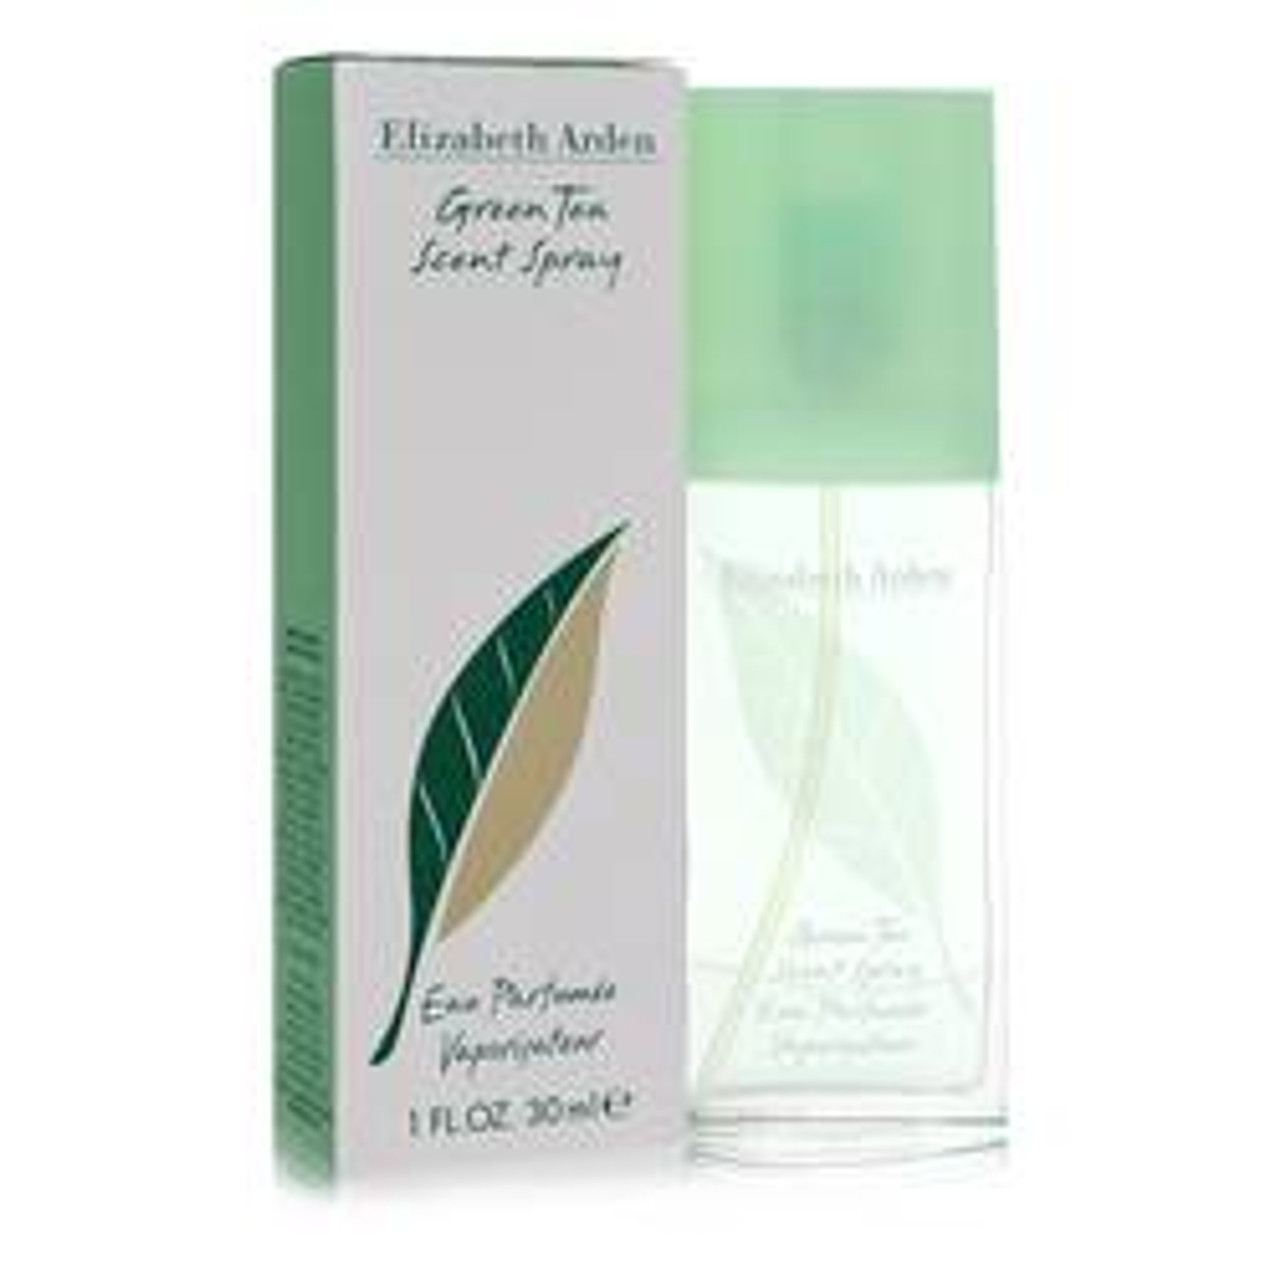 Green Tea Perfume By Elizabeth Arden Eau De Parfum Spray 1 oz for Women - [From 31.00 - Choose pk Qty ] - *Ships from Miami